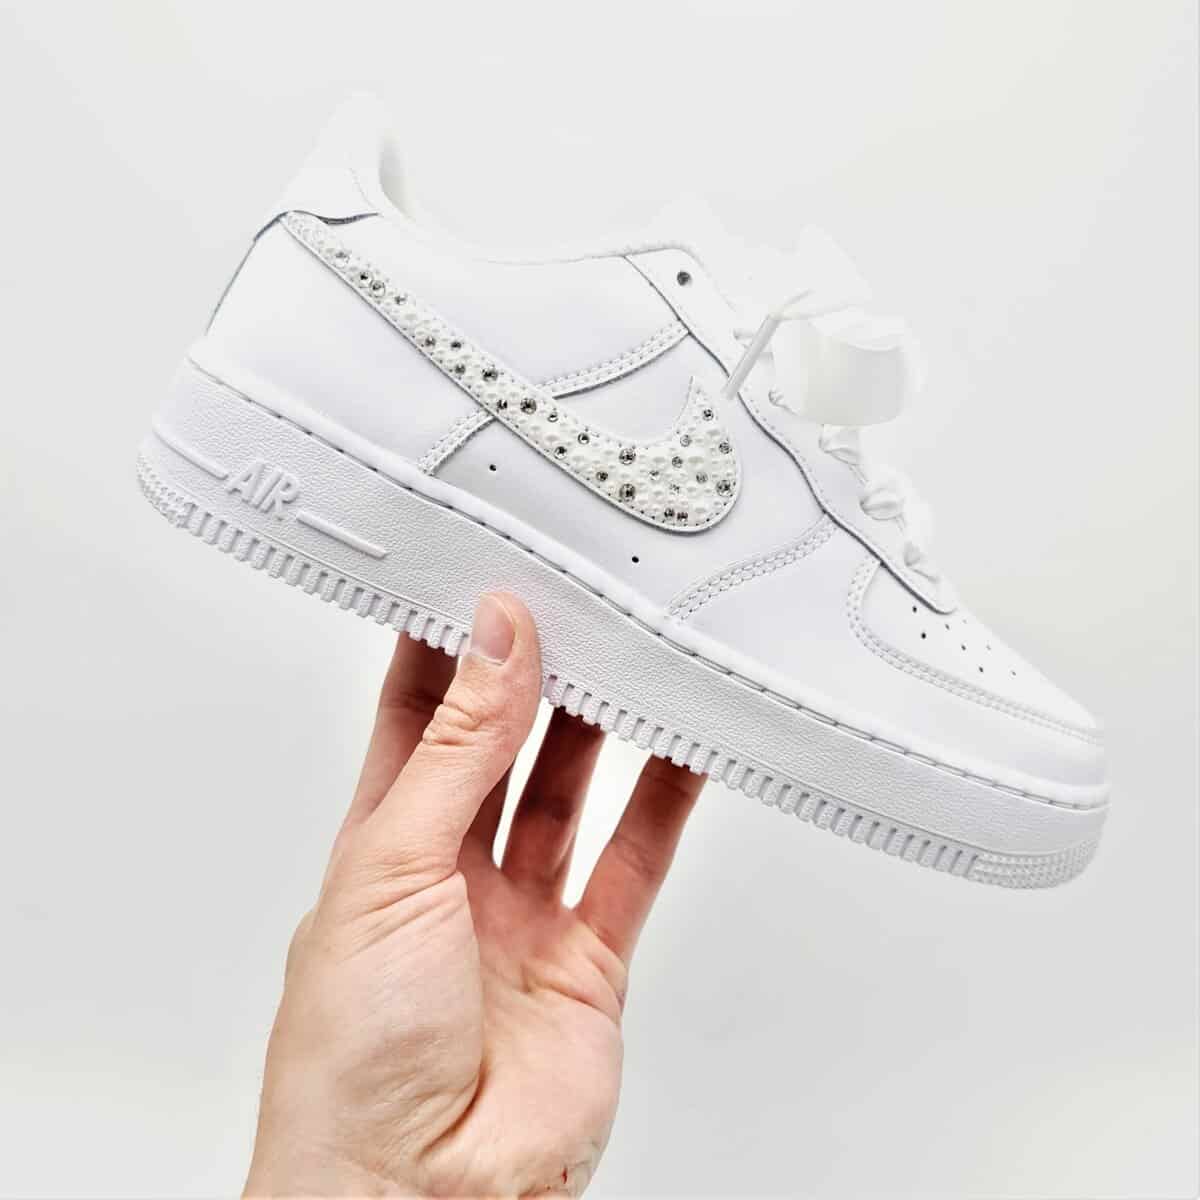 Fahrenheit Humanista Grifo Nike Air Force 1 Wedding Pearl - Double G Customs - Custom sneakers